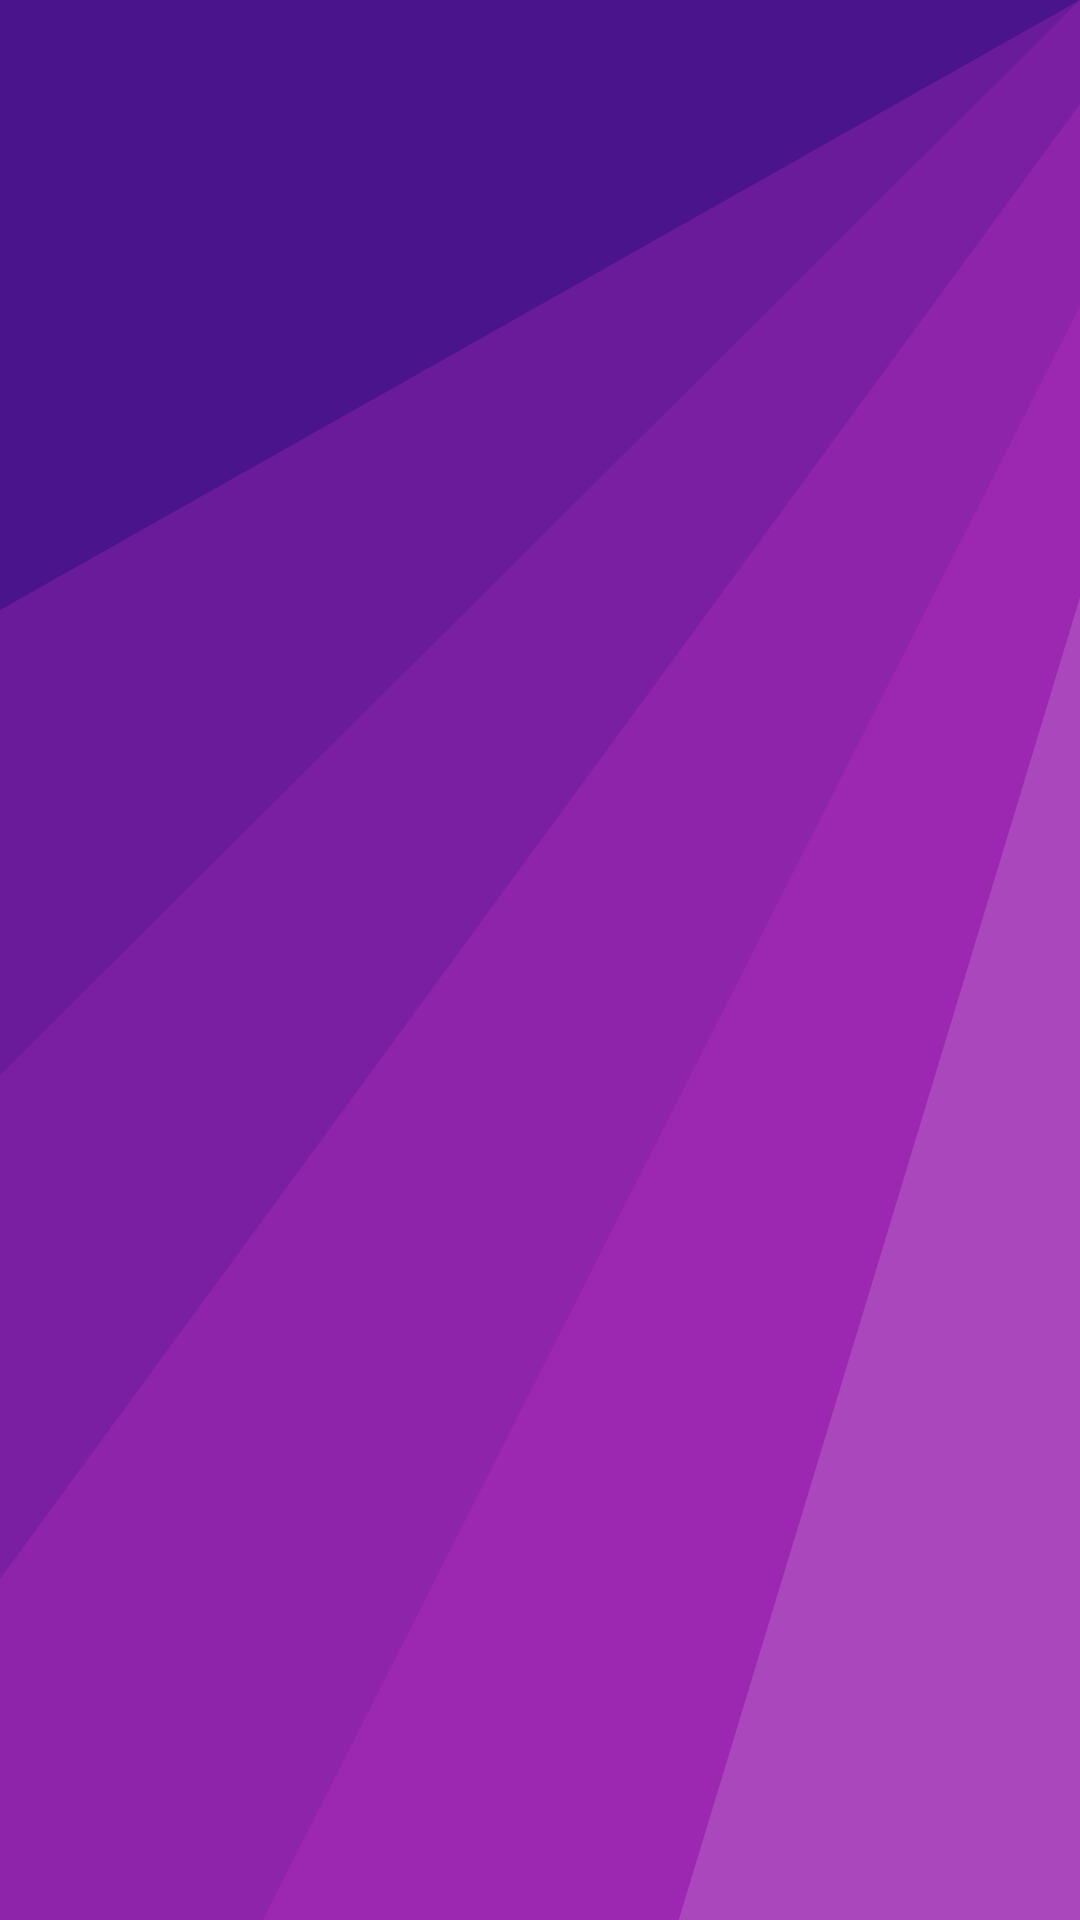 Wallpaper flat violet_v2. Android wallpaper, Purple wallpaper